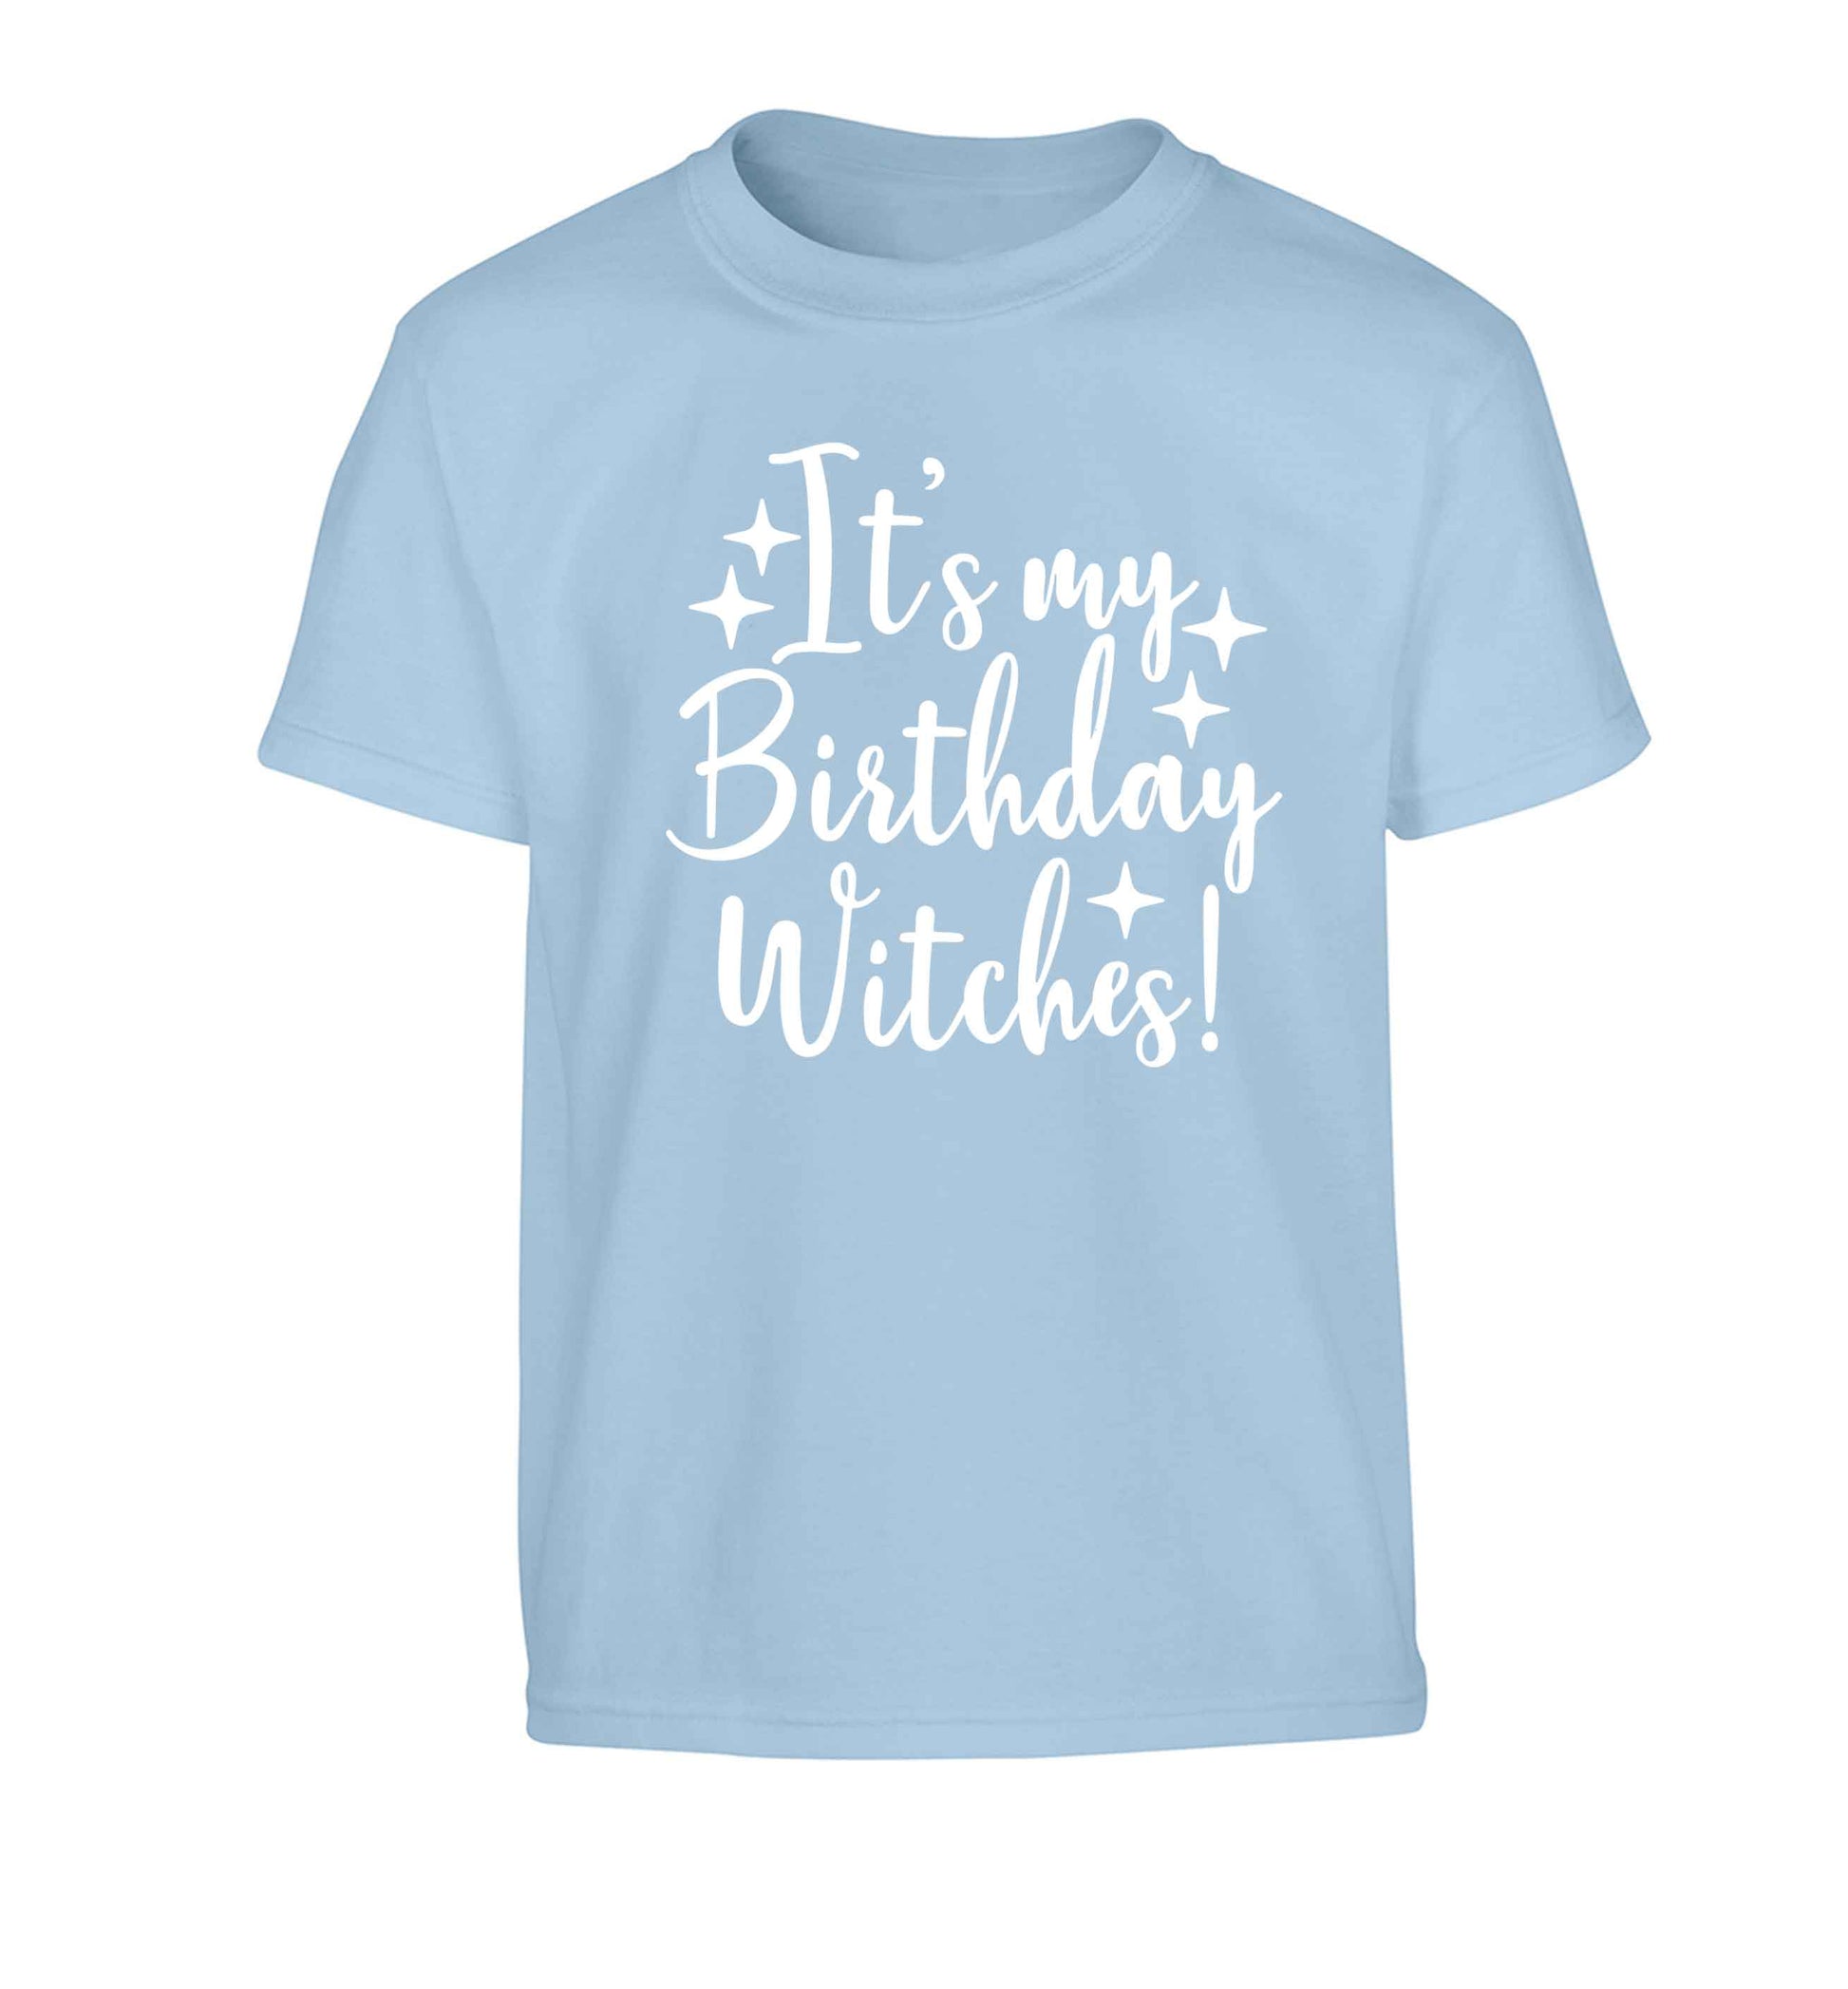 It's my birthday witches!Children's light blue Tshirt 12-13 Years